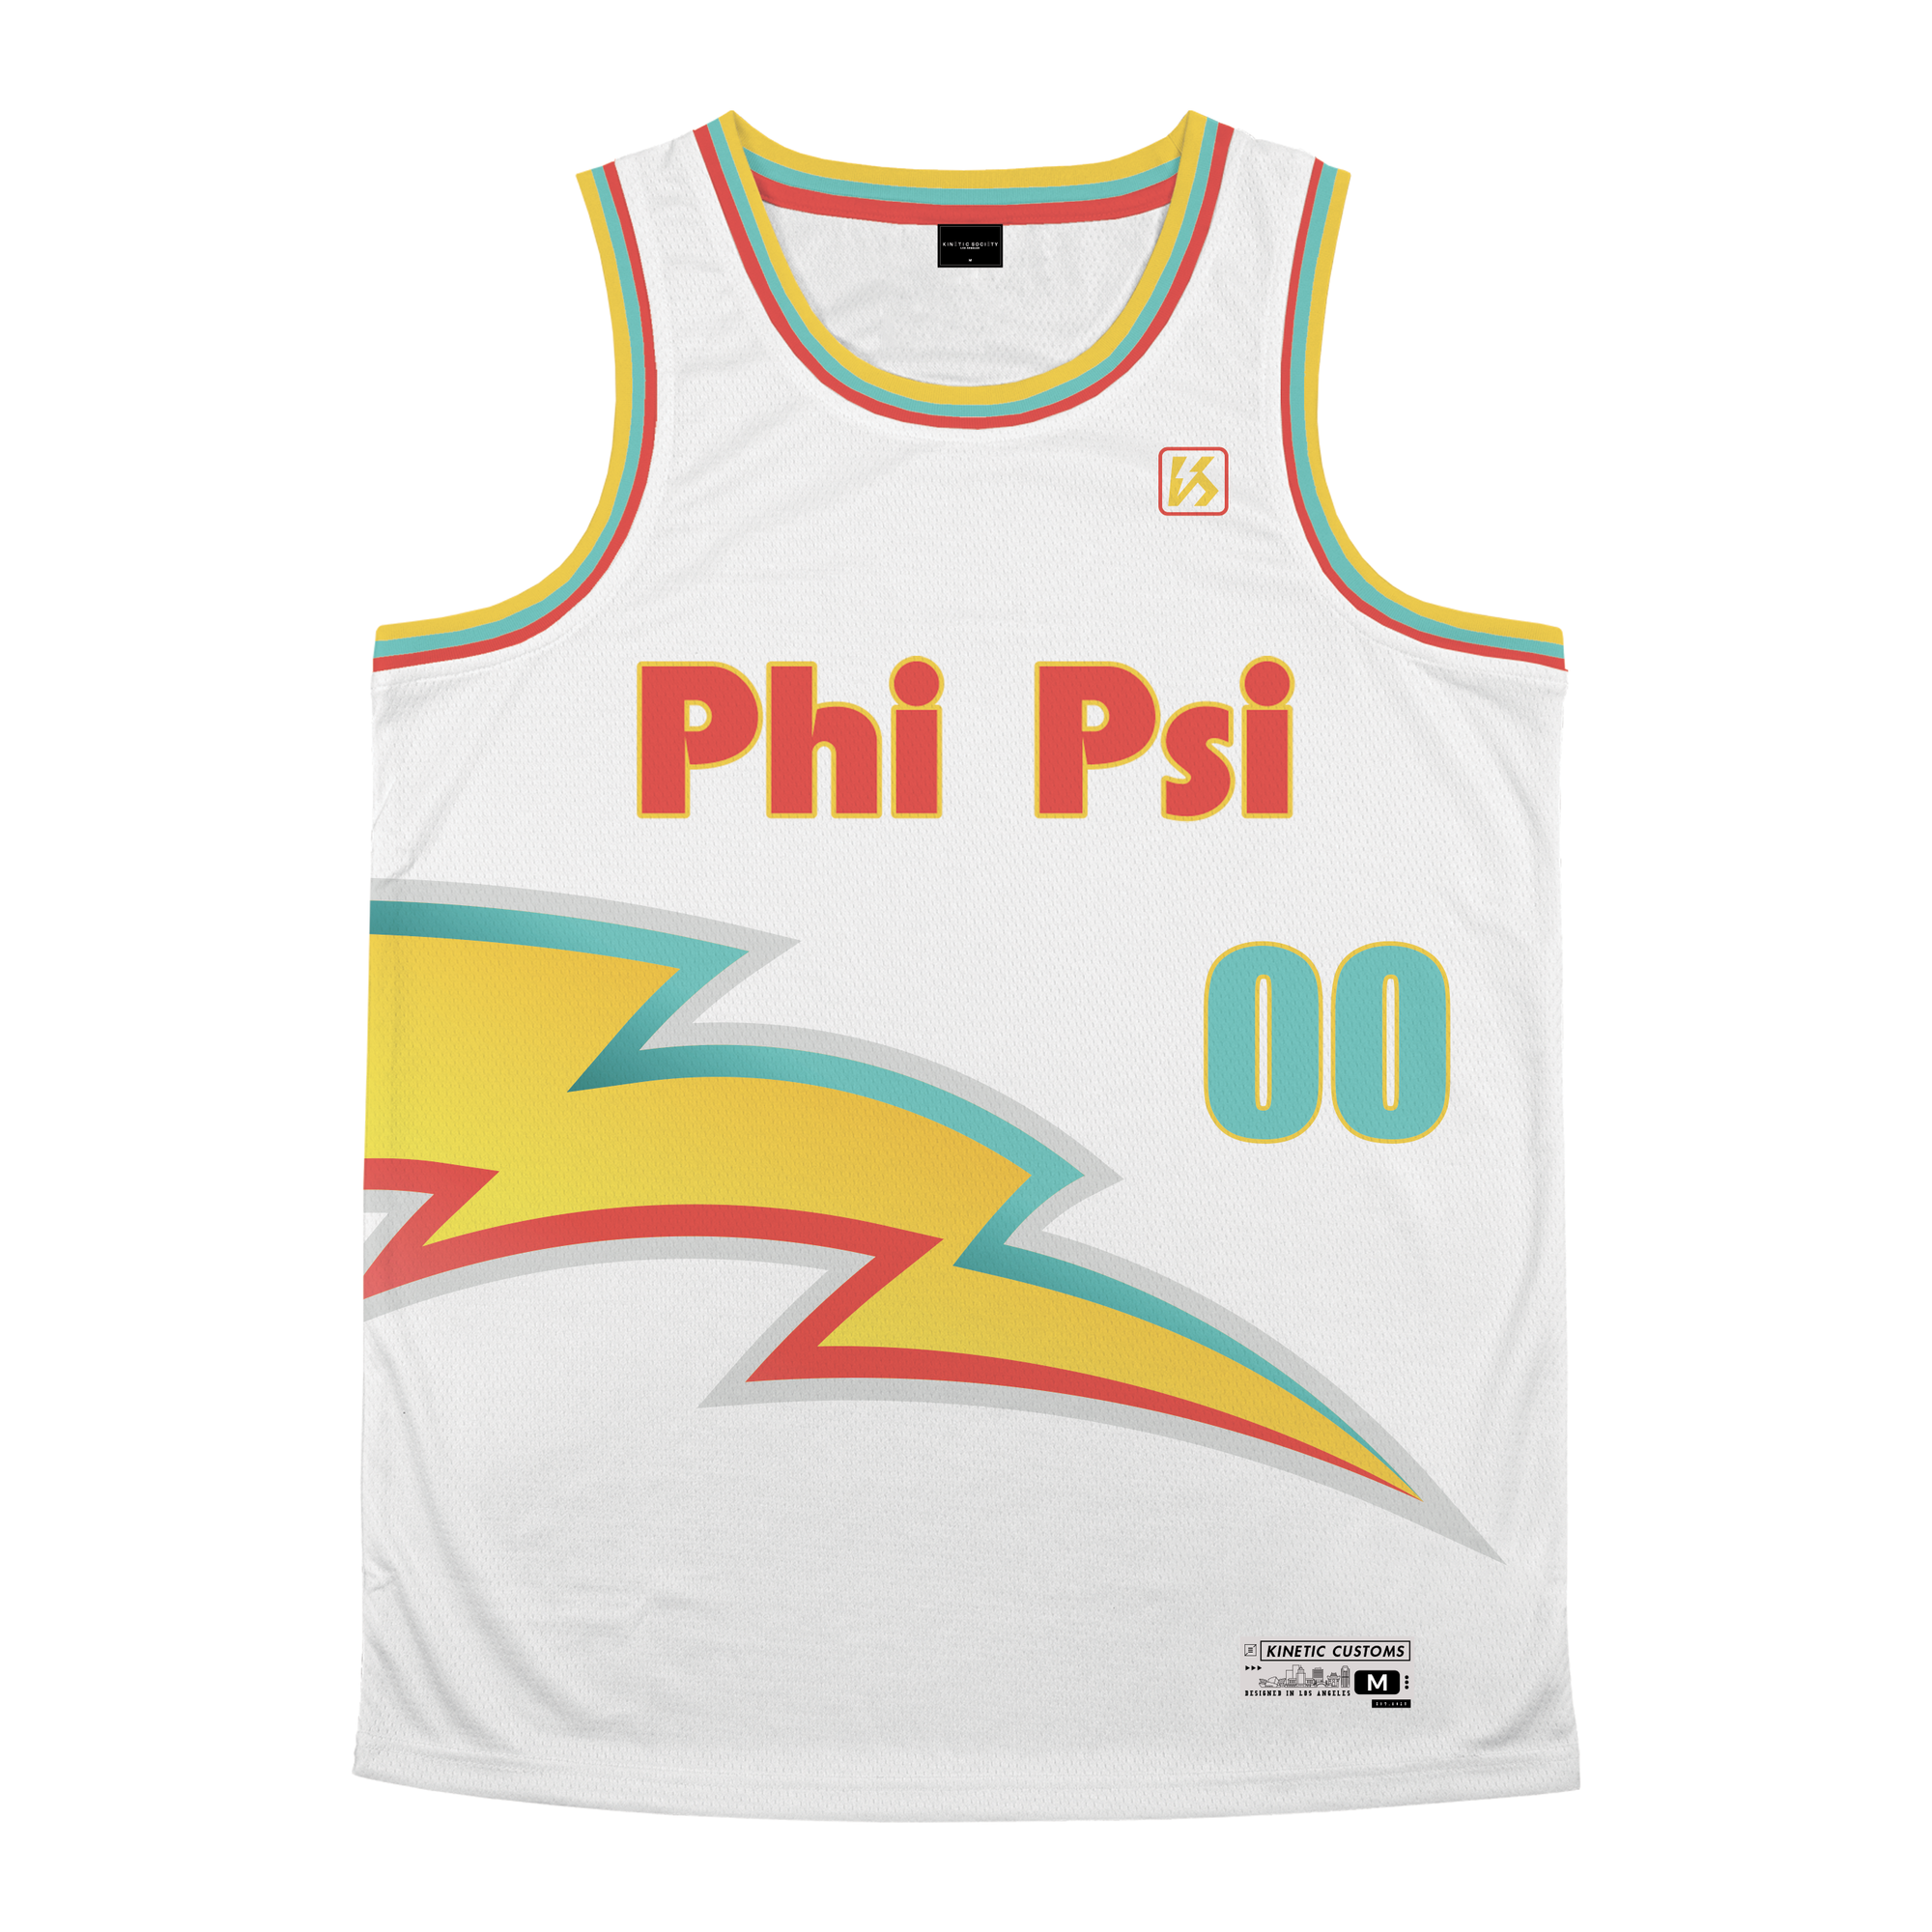 Phi Kappa Psi - Bolt Basketball Jersey